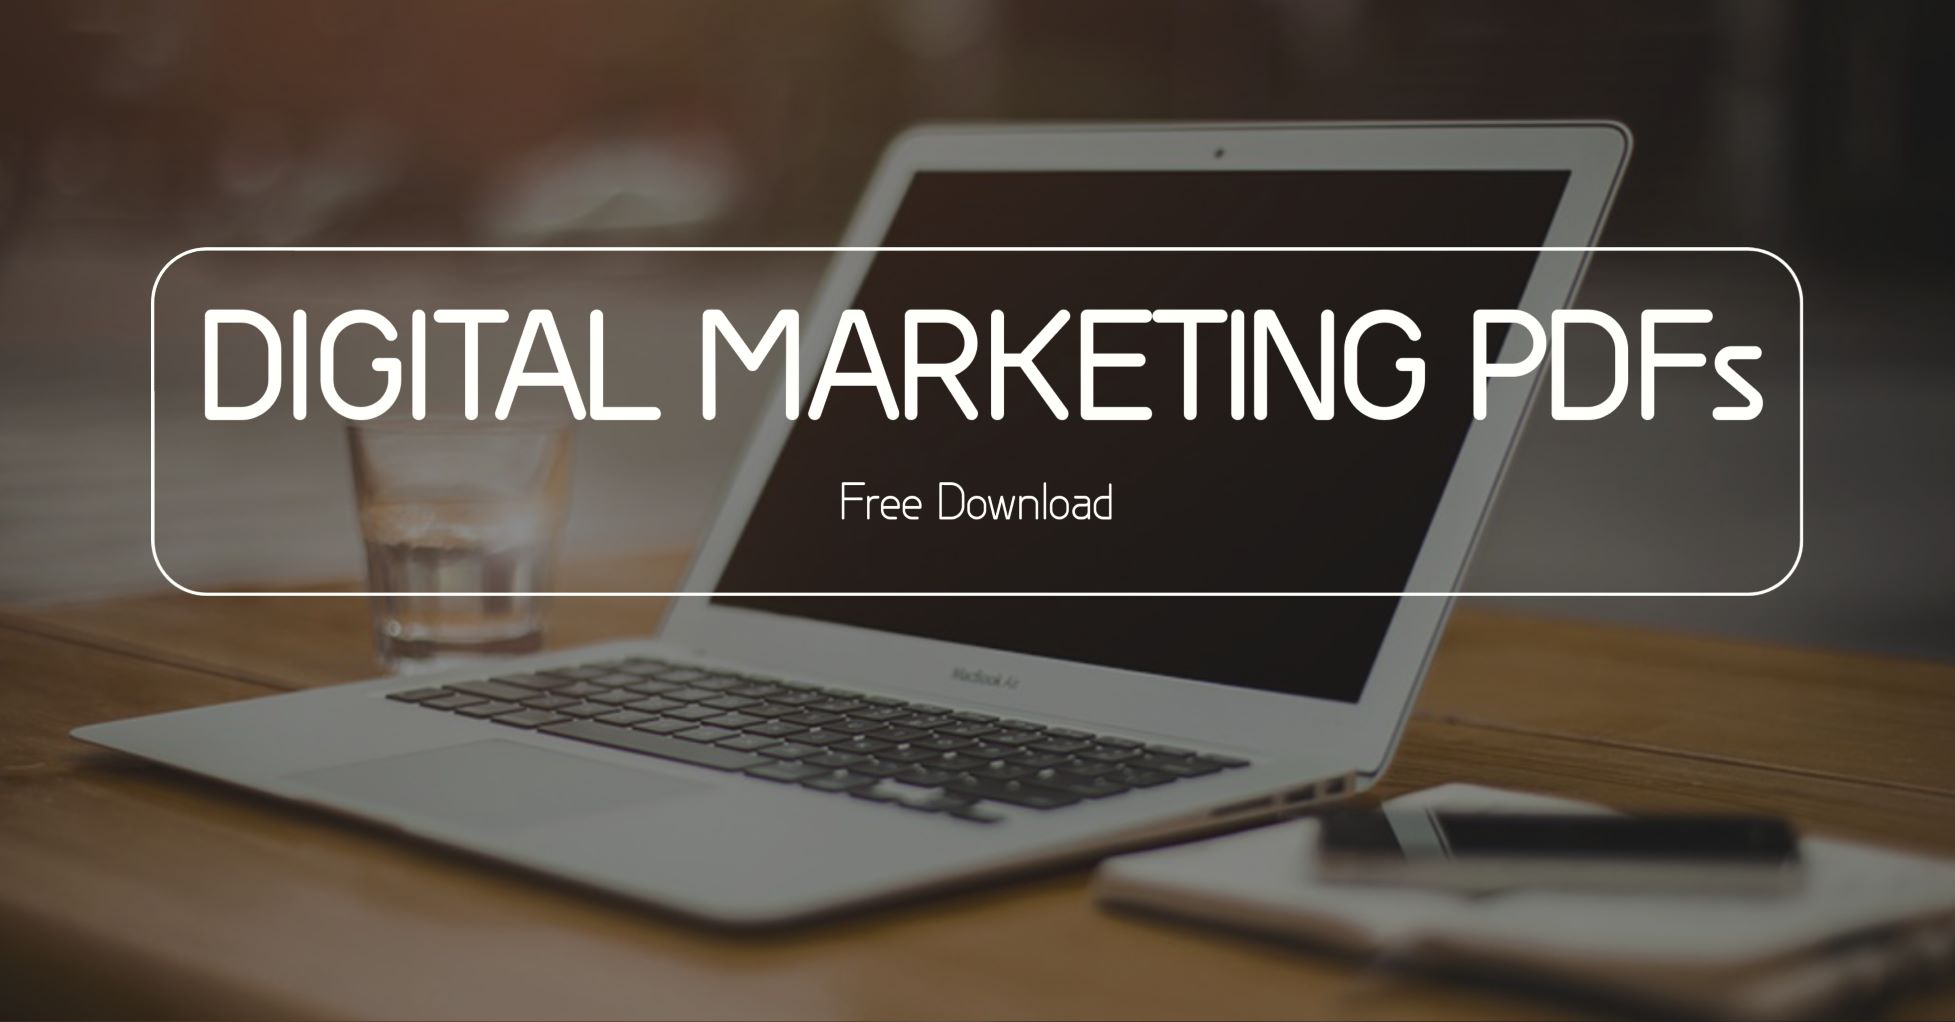 Digital Marketing PDF Free Download Easy Marketing Reviews